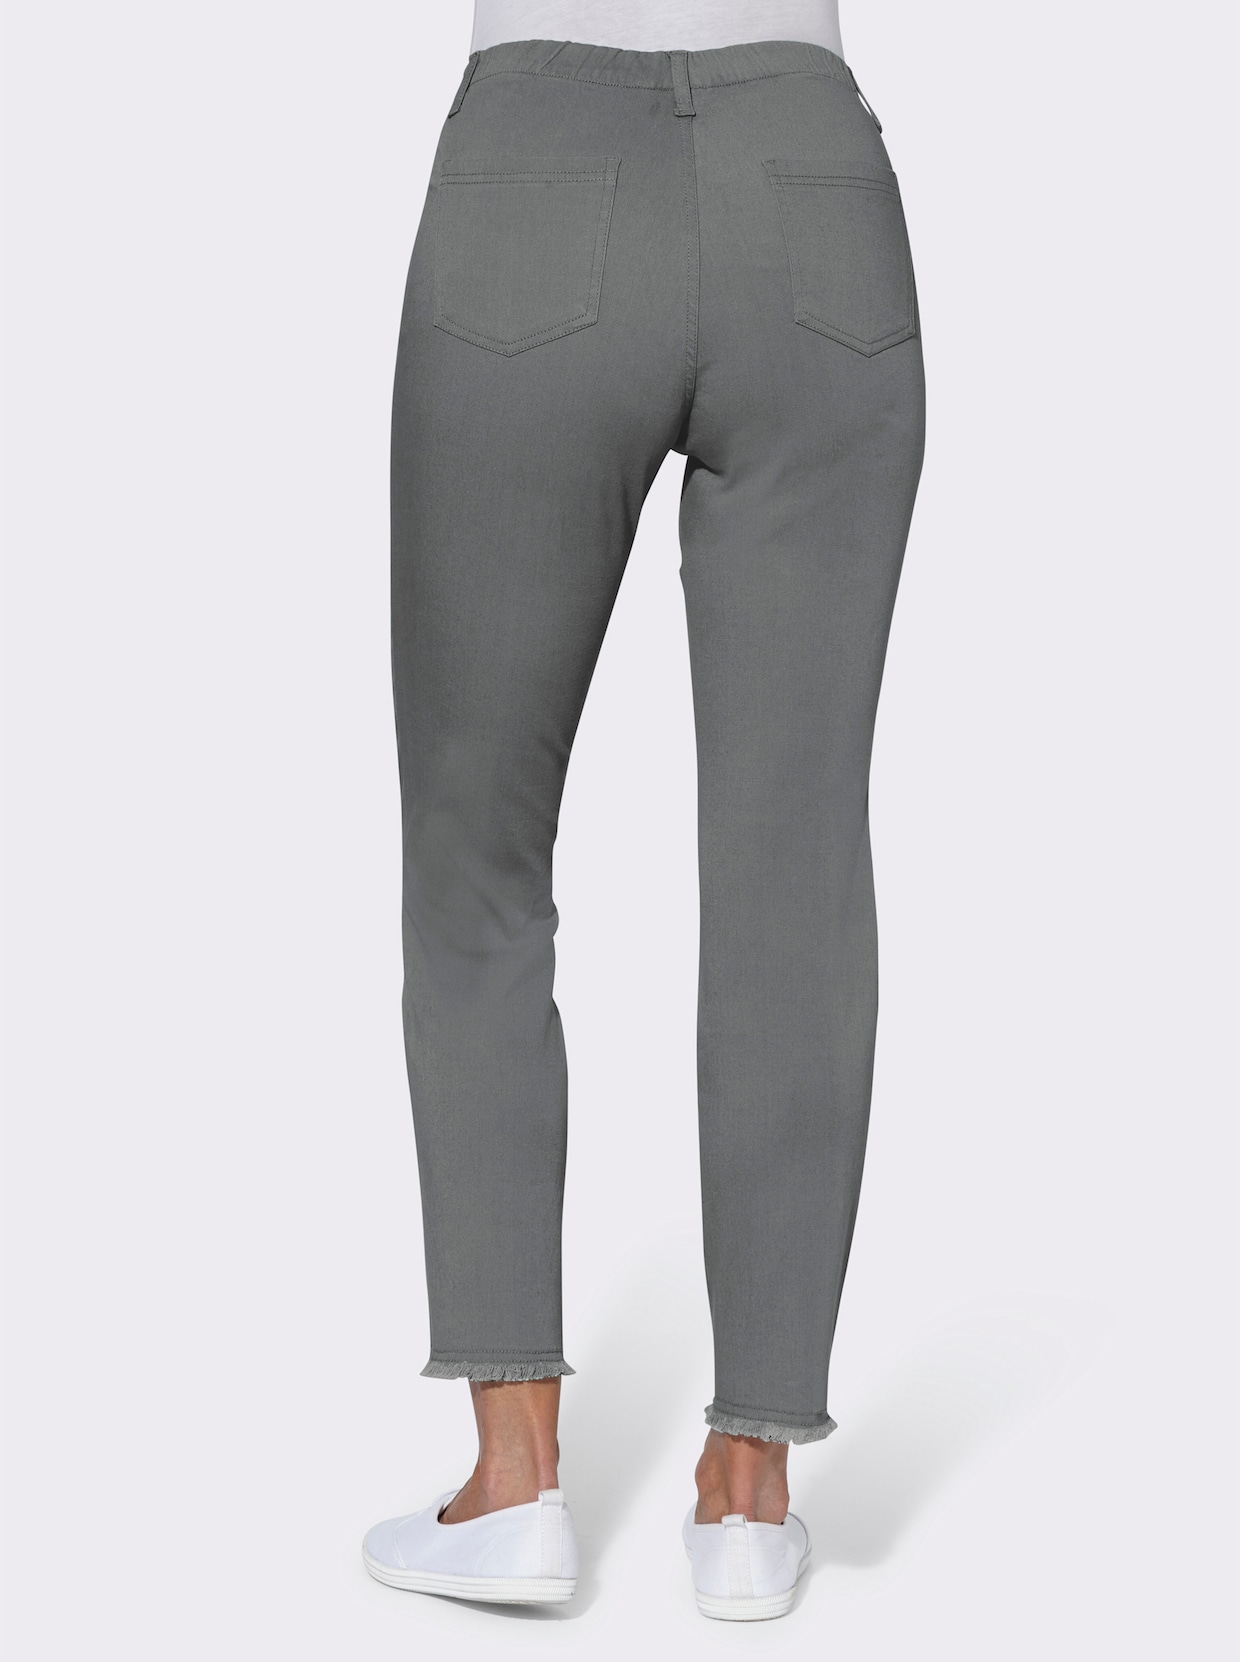 Jeans - grey denim